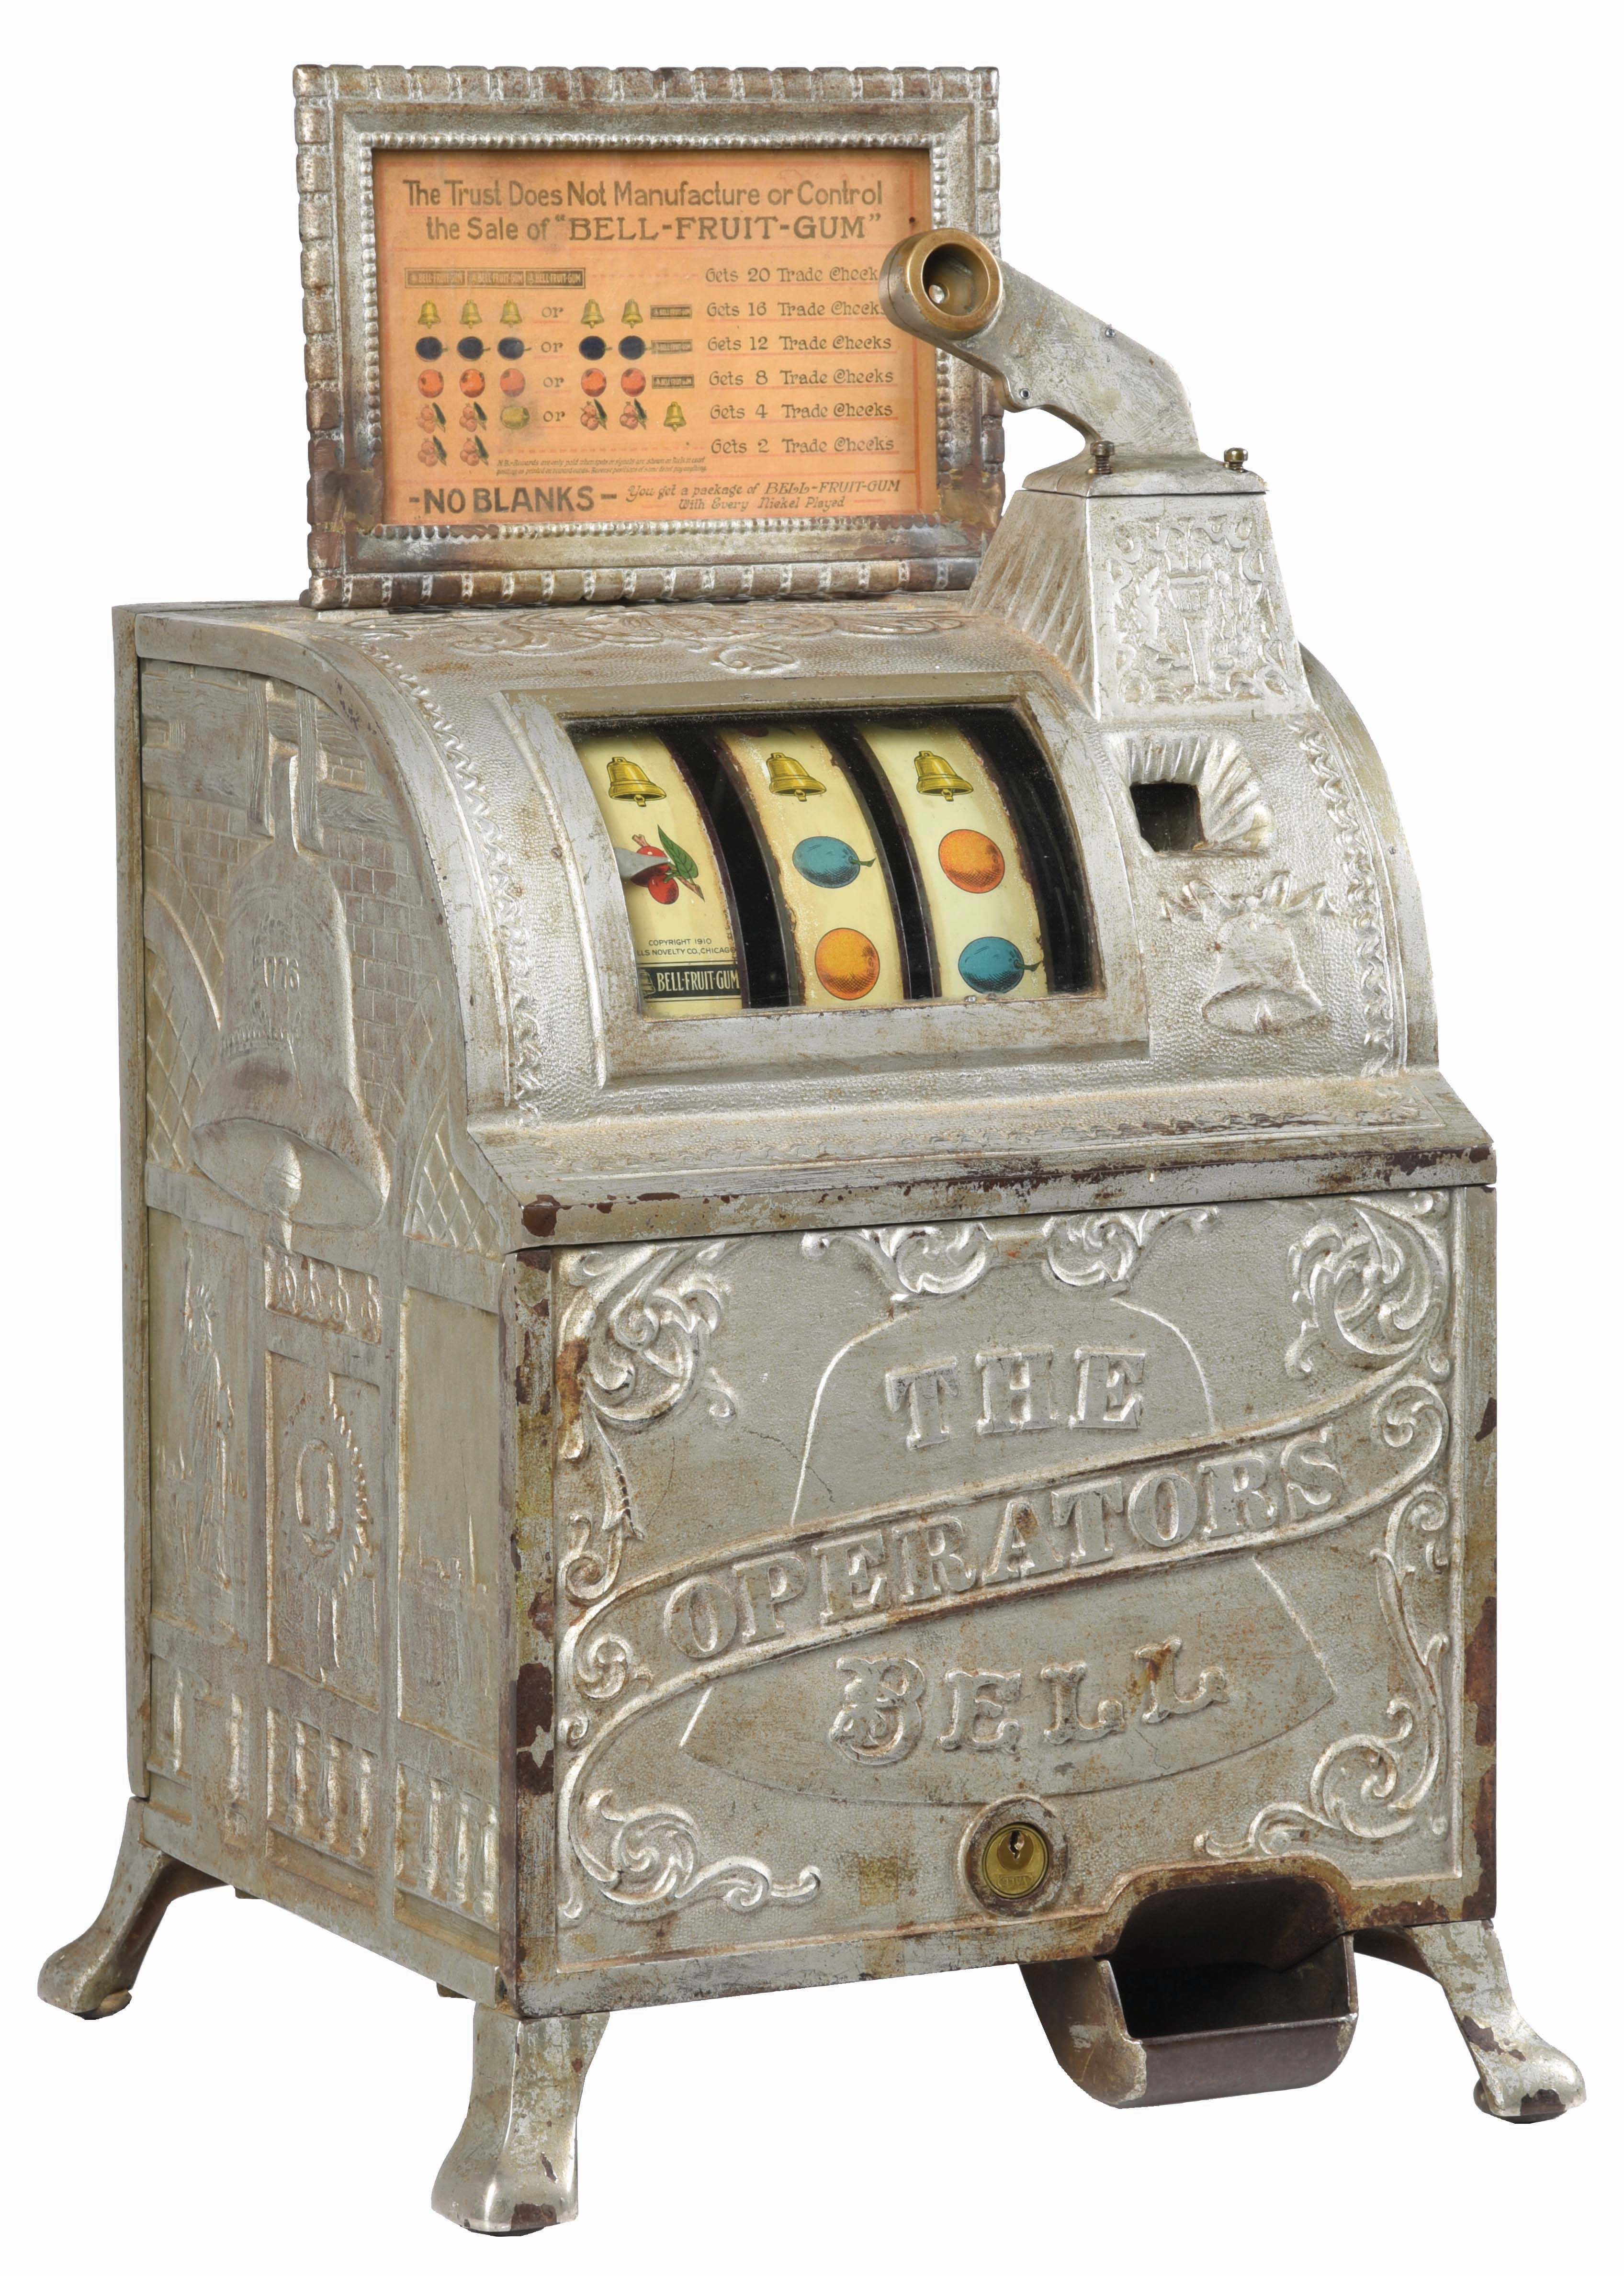 mills operators bell slot machine